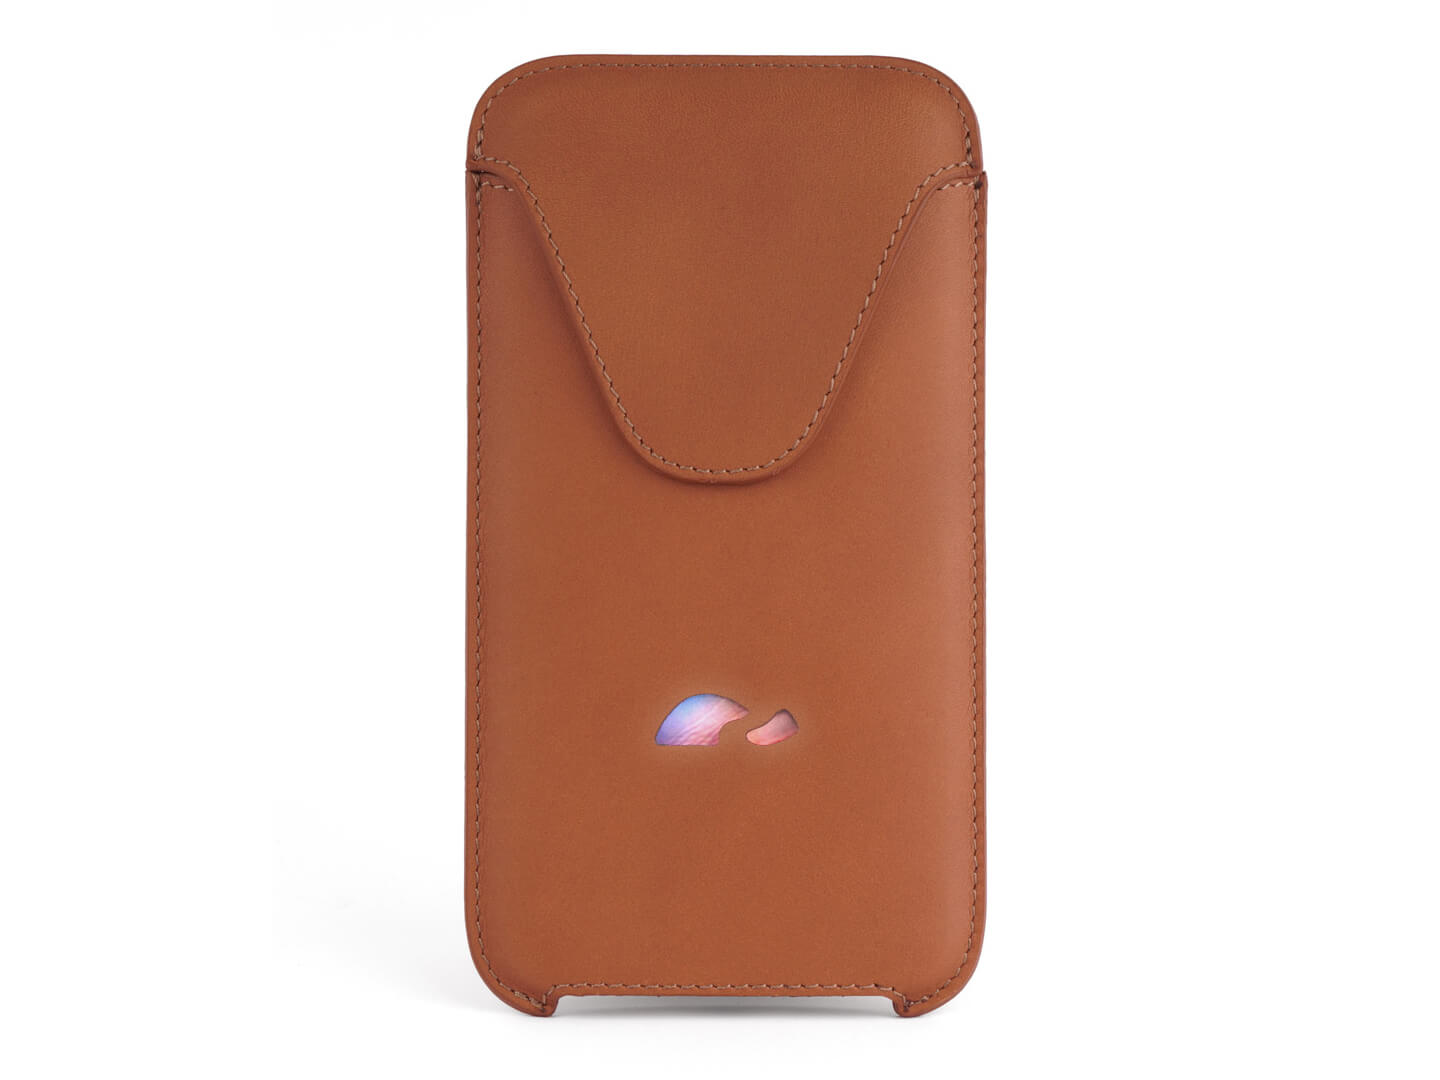 iPhone 6 / 7 / 8 Plus leather case slim sleeve - tan - Carapaz